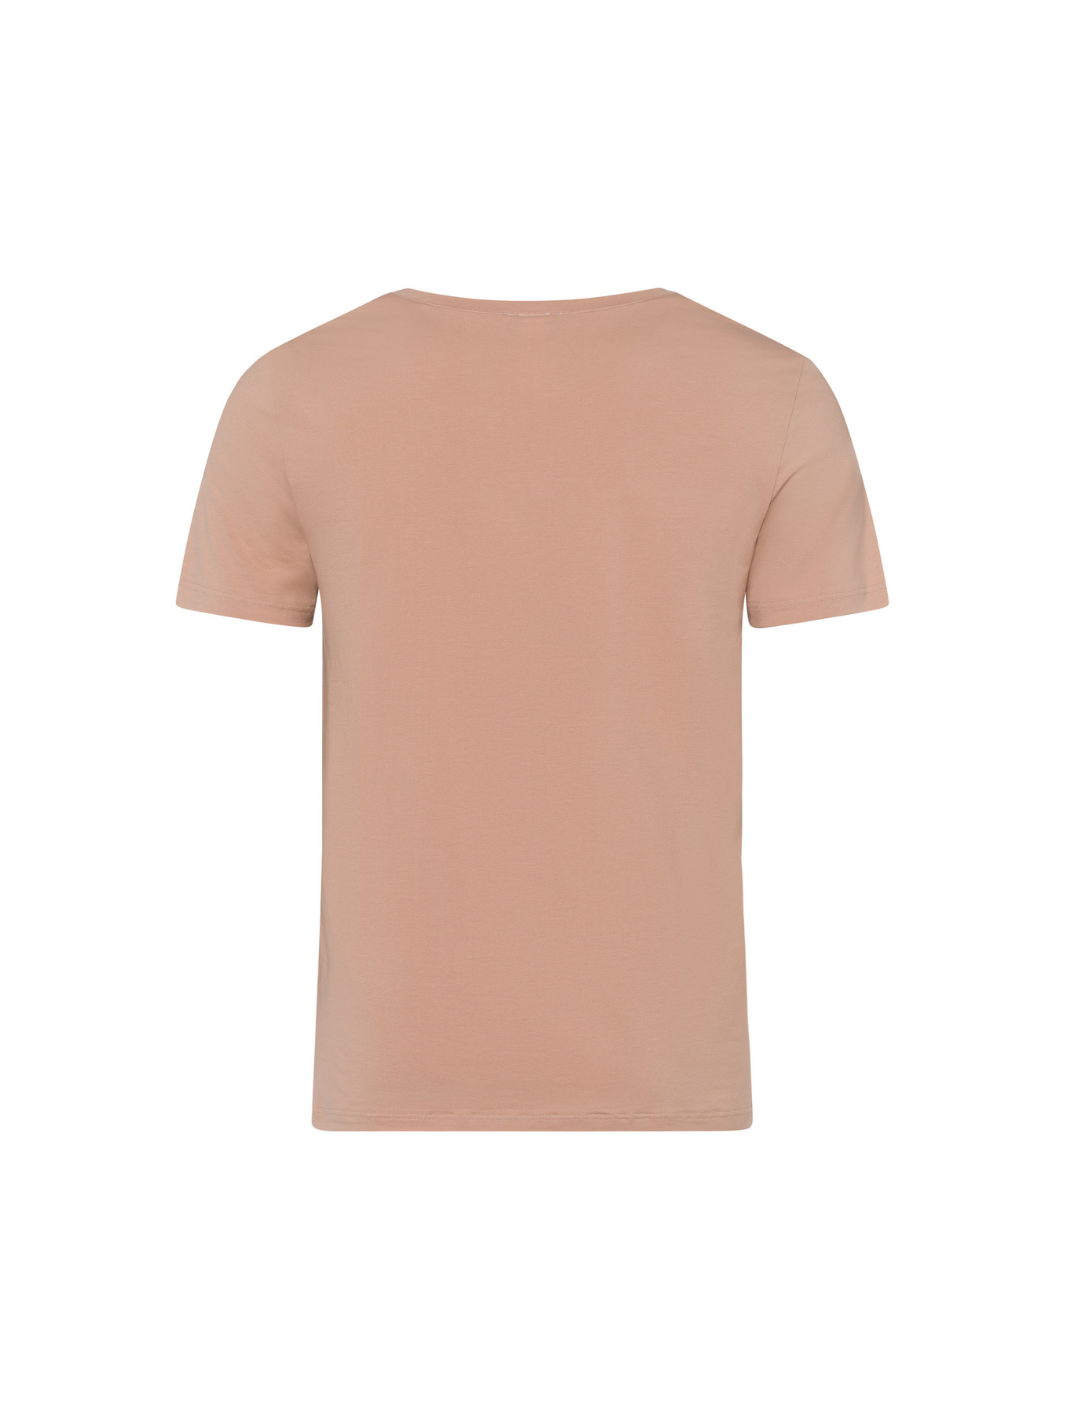 V-Shirt Cotton Superior Kurzarm- Neutral